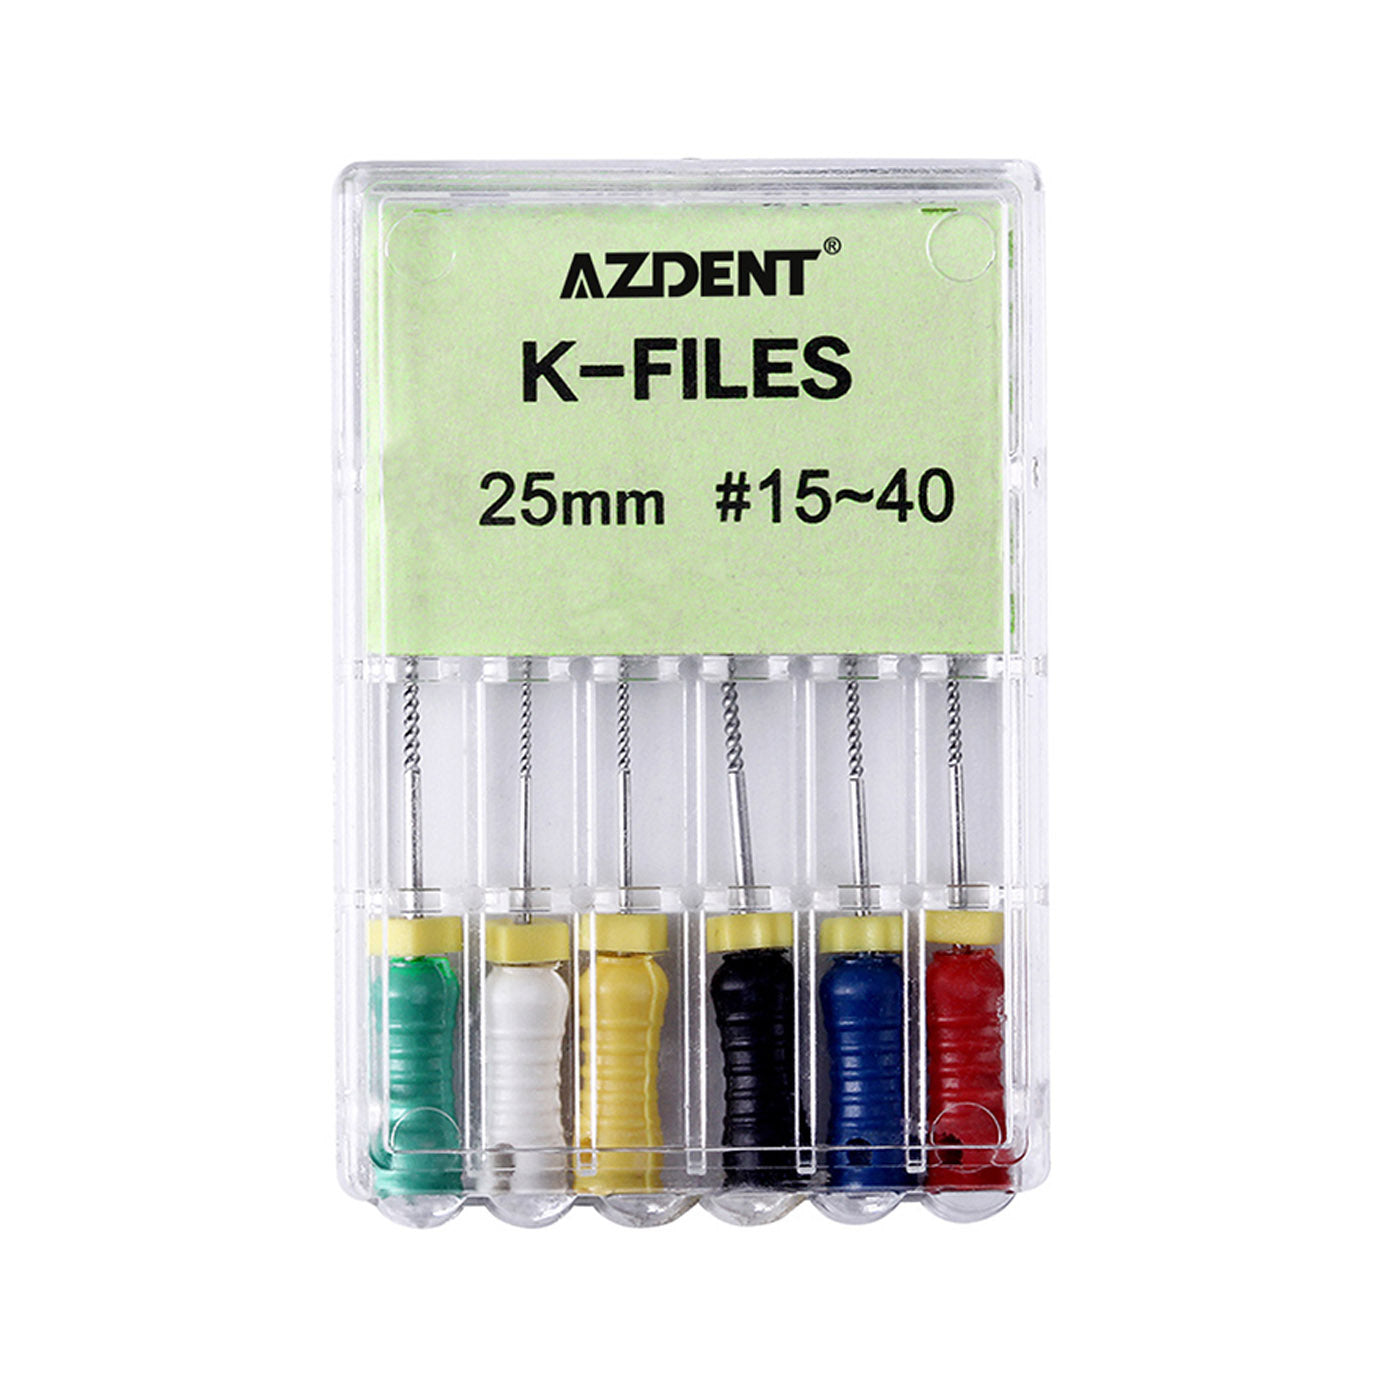 AZDENT Dental NiTi K-Files Hand Use 25mm Assorted #15-40 6pcs/Pack-azdentall.com